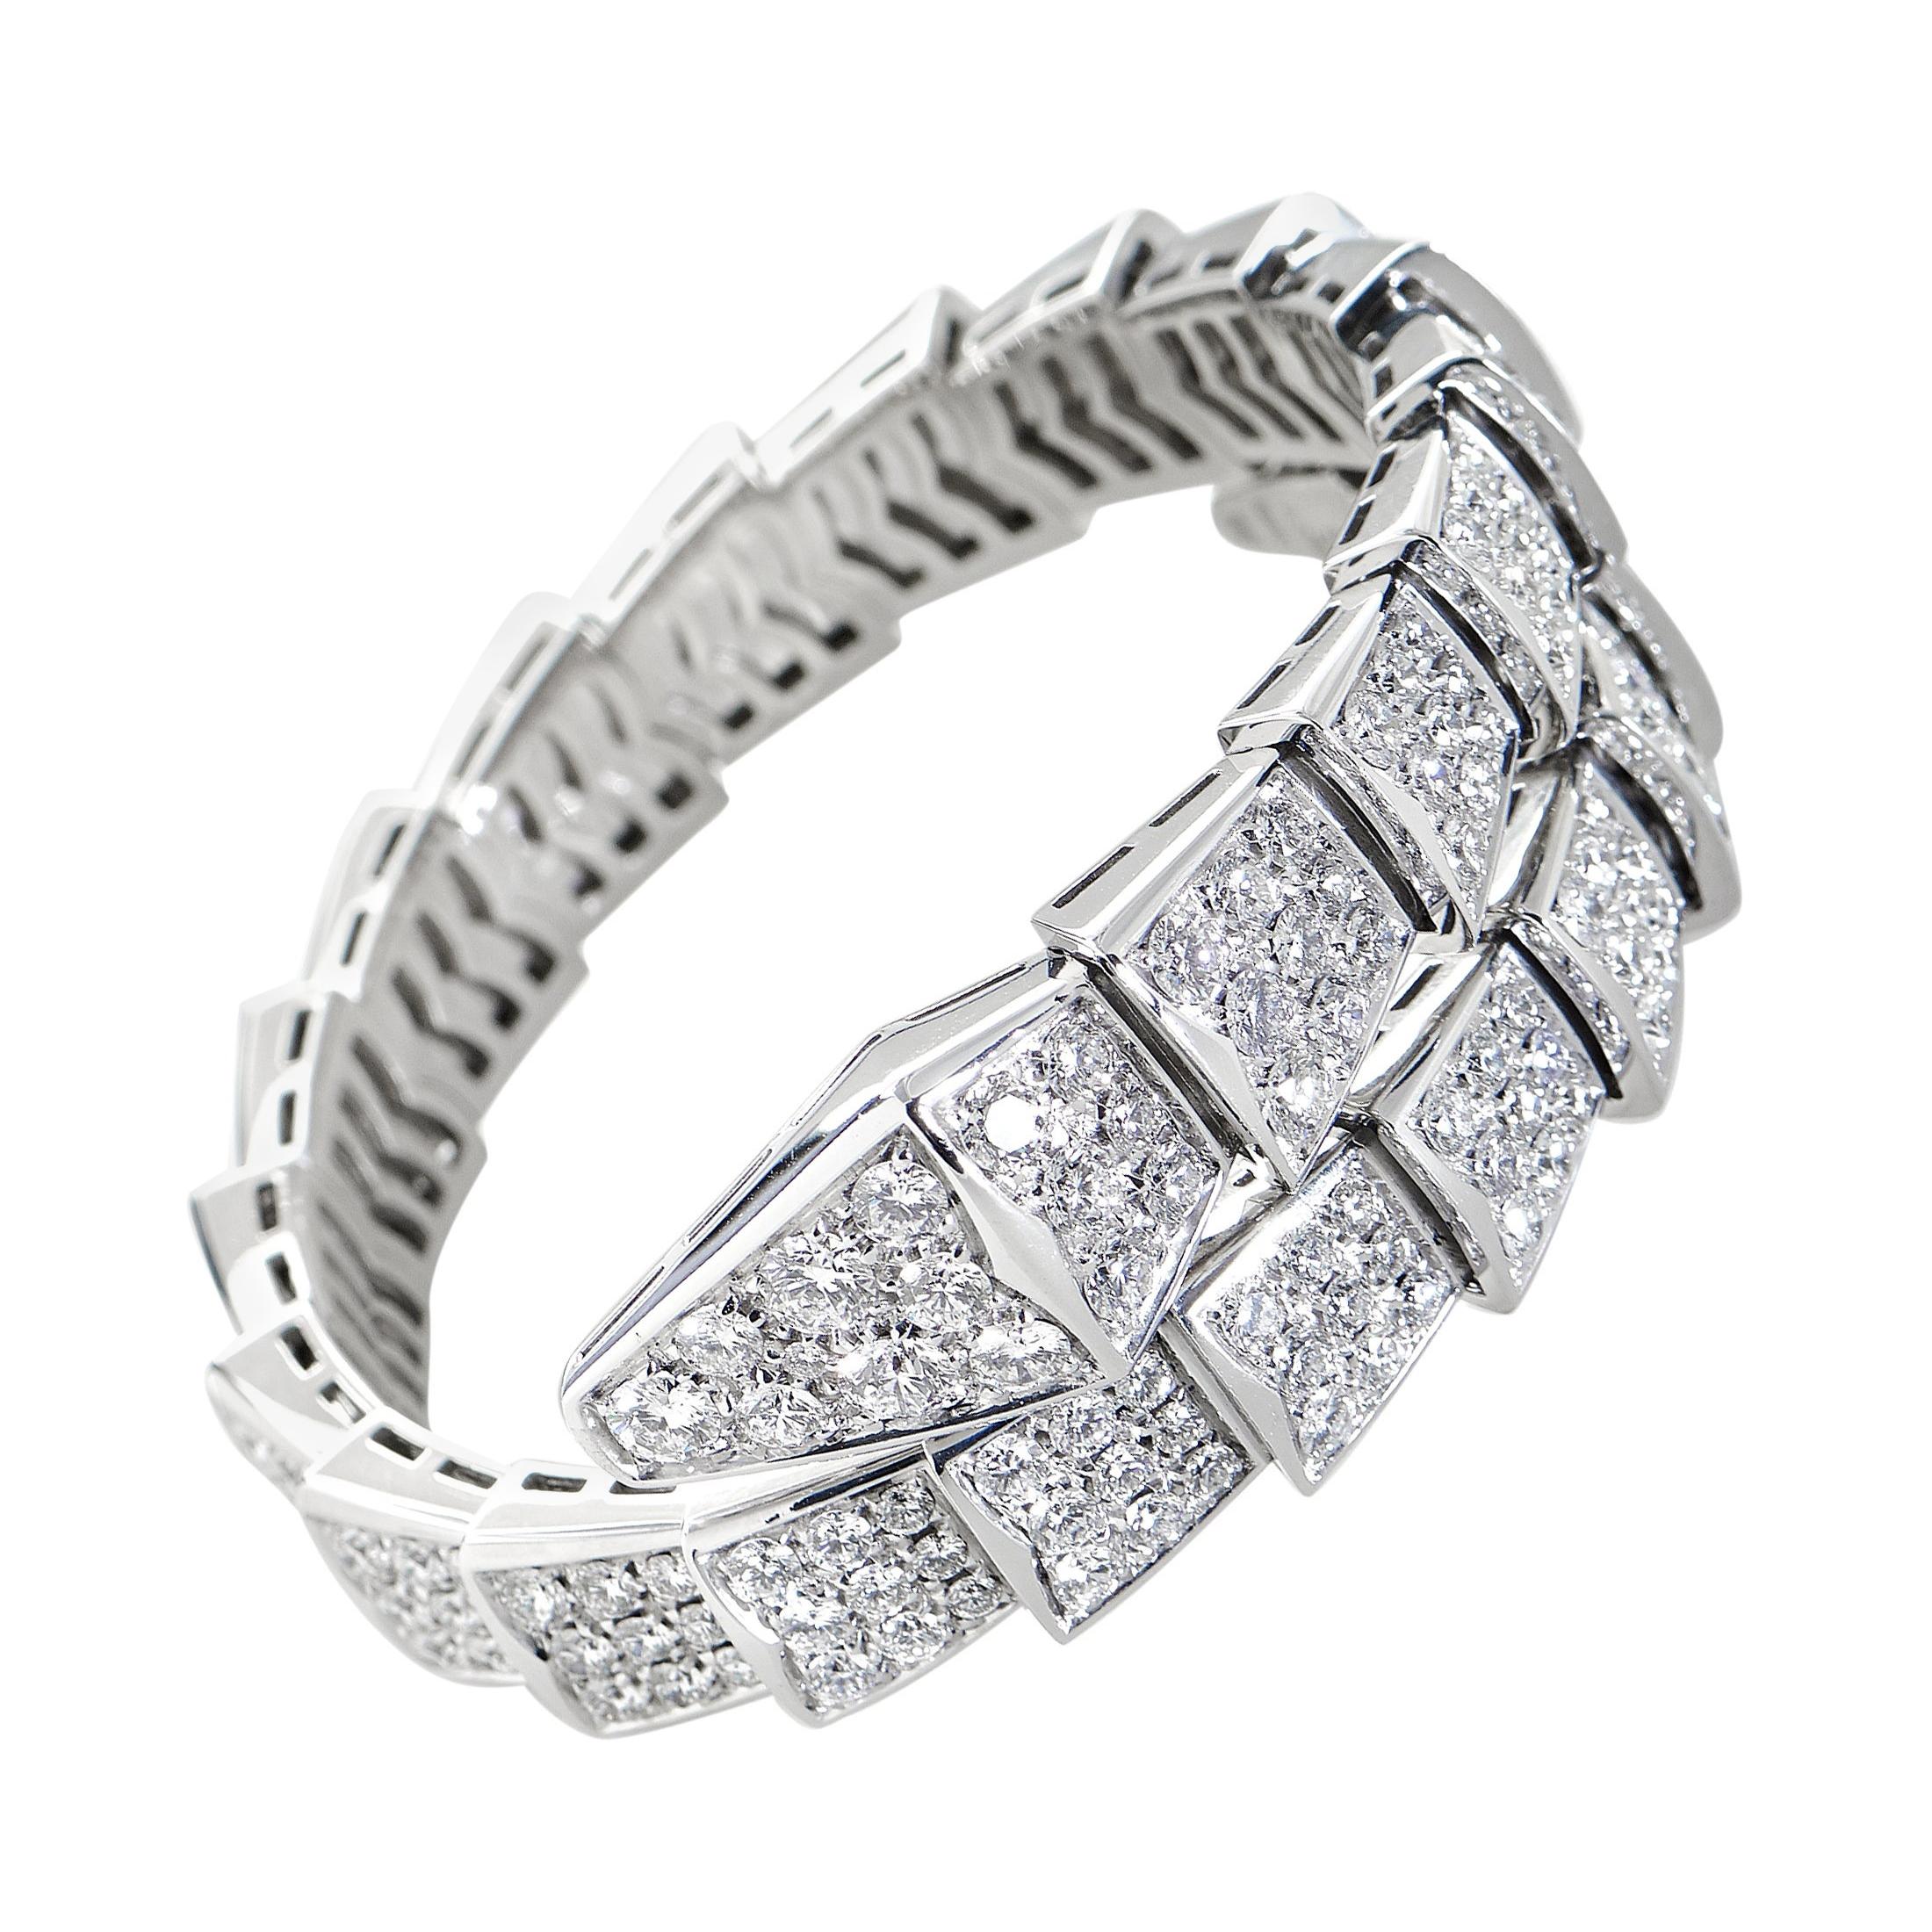 Bvlgari Serpenti 18K White Gold Full Diamond Pave Bracelet Size Small